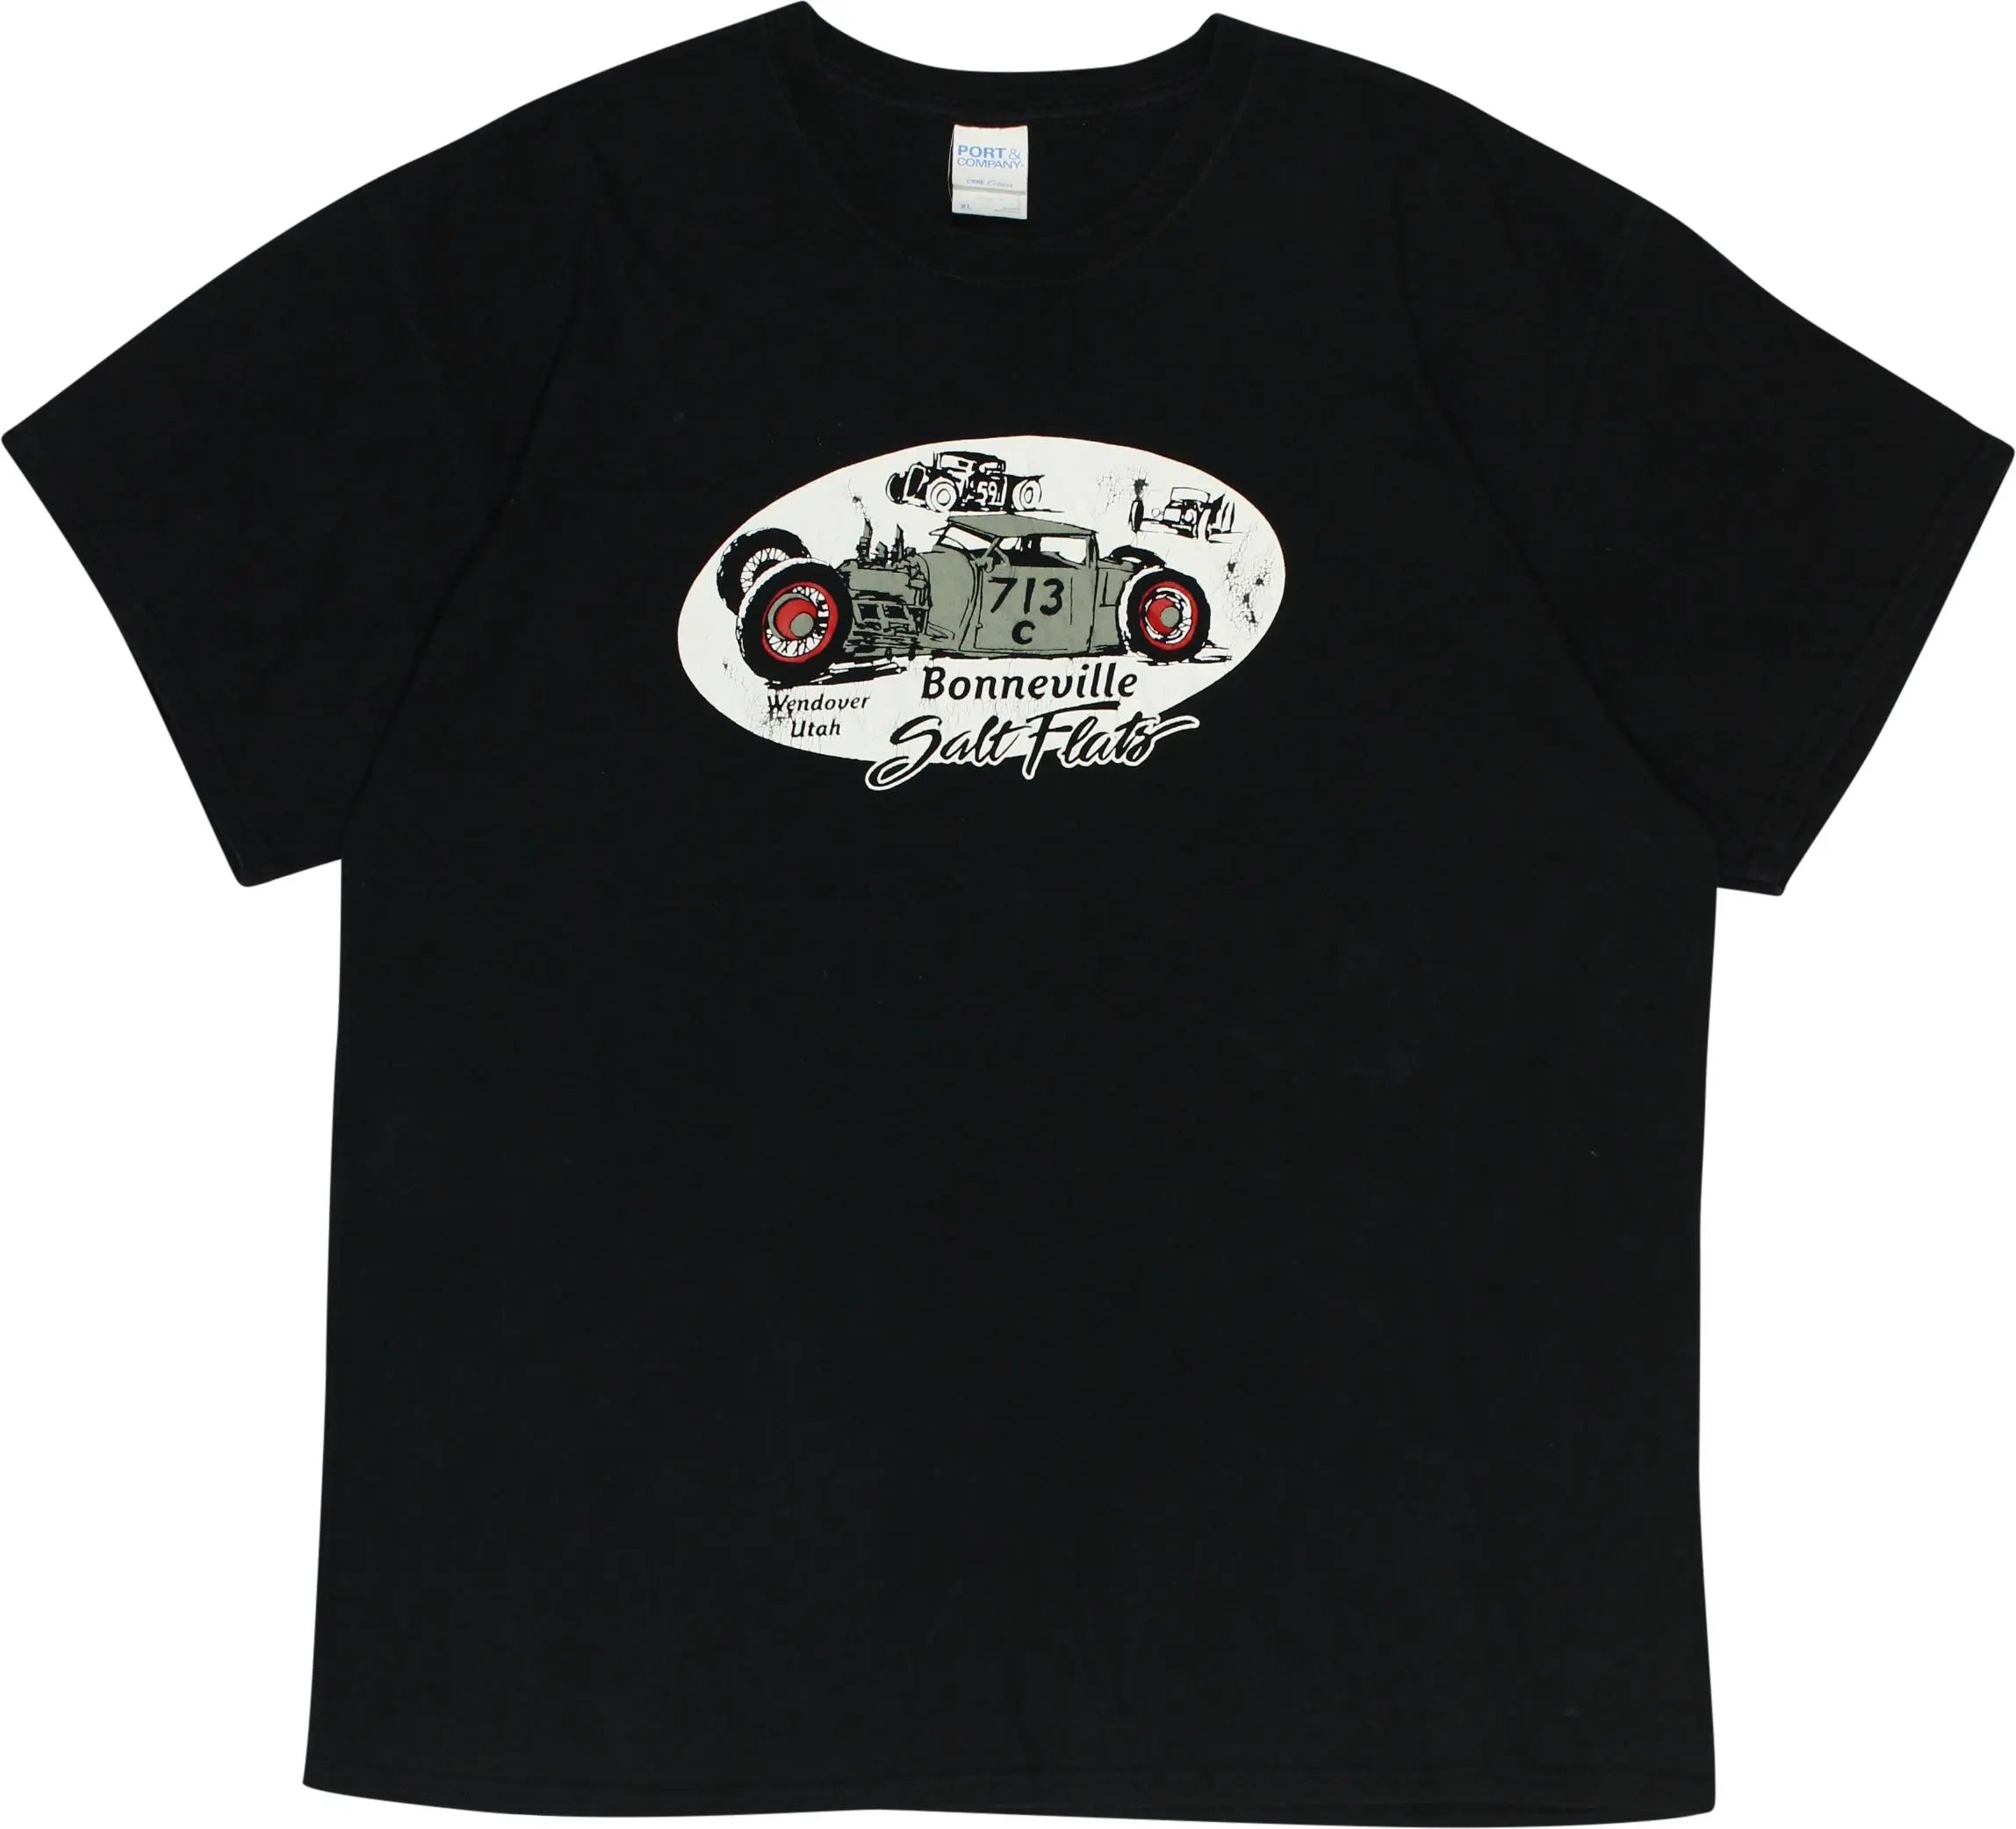 Port & Company - Salt Flats Merchandise T-Shirt- ThriftTale.com - Vintage and second handclothing